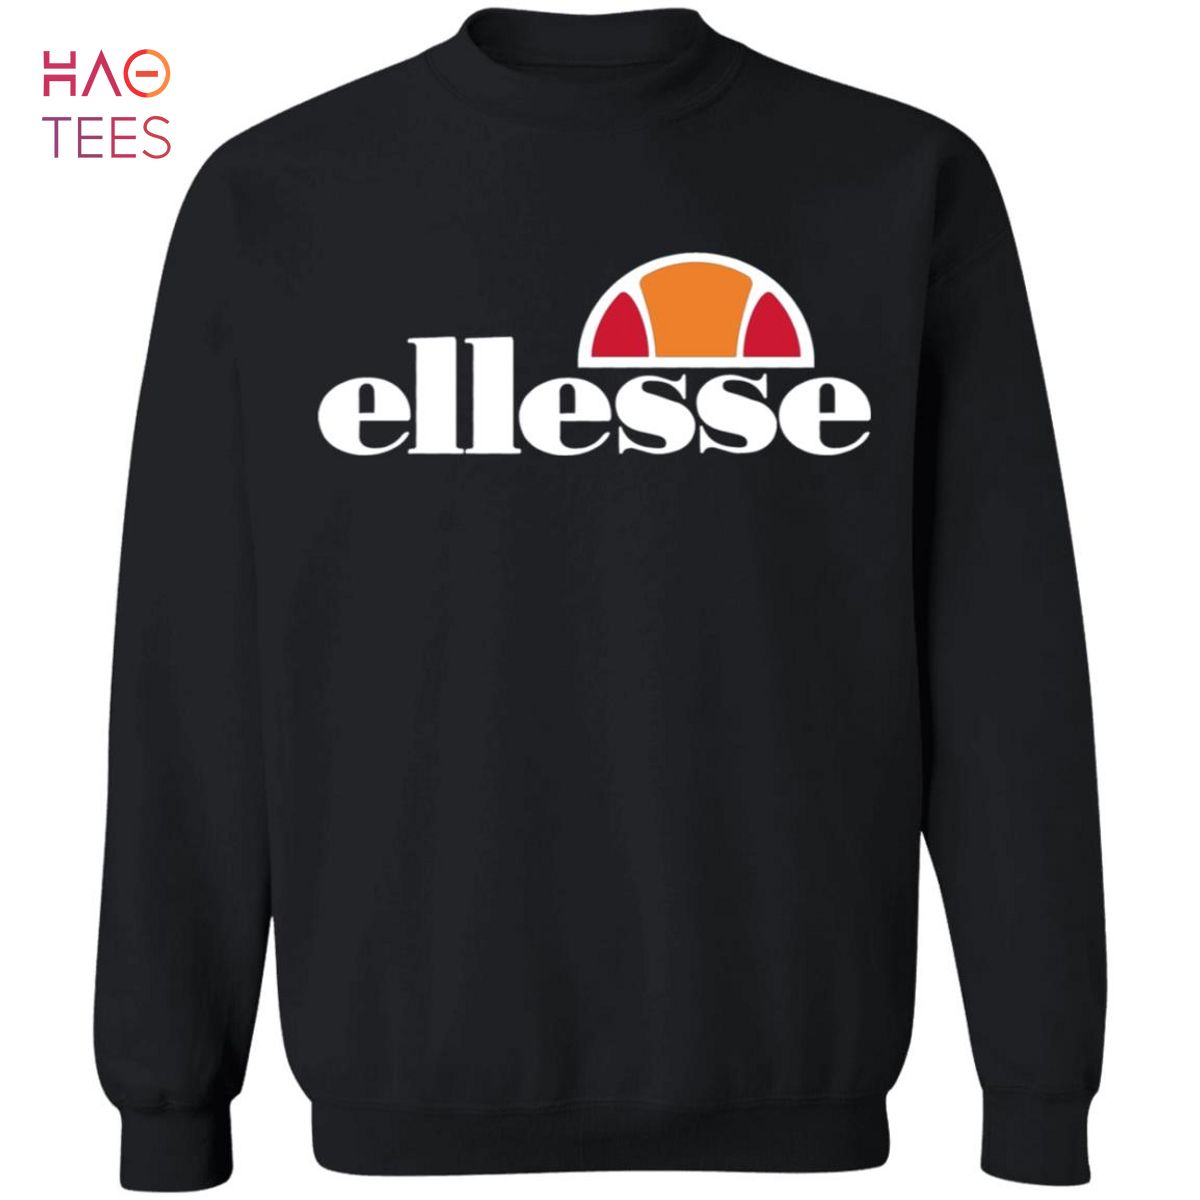 HOT Ellesse Sweater